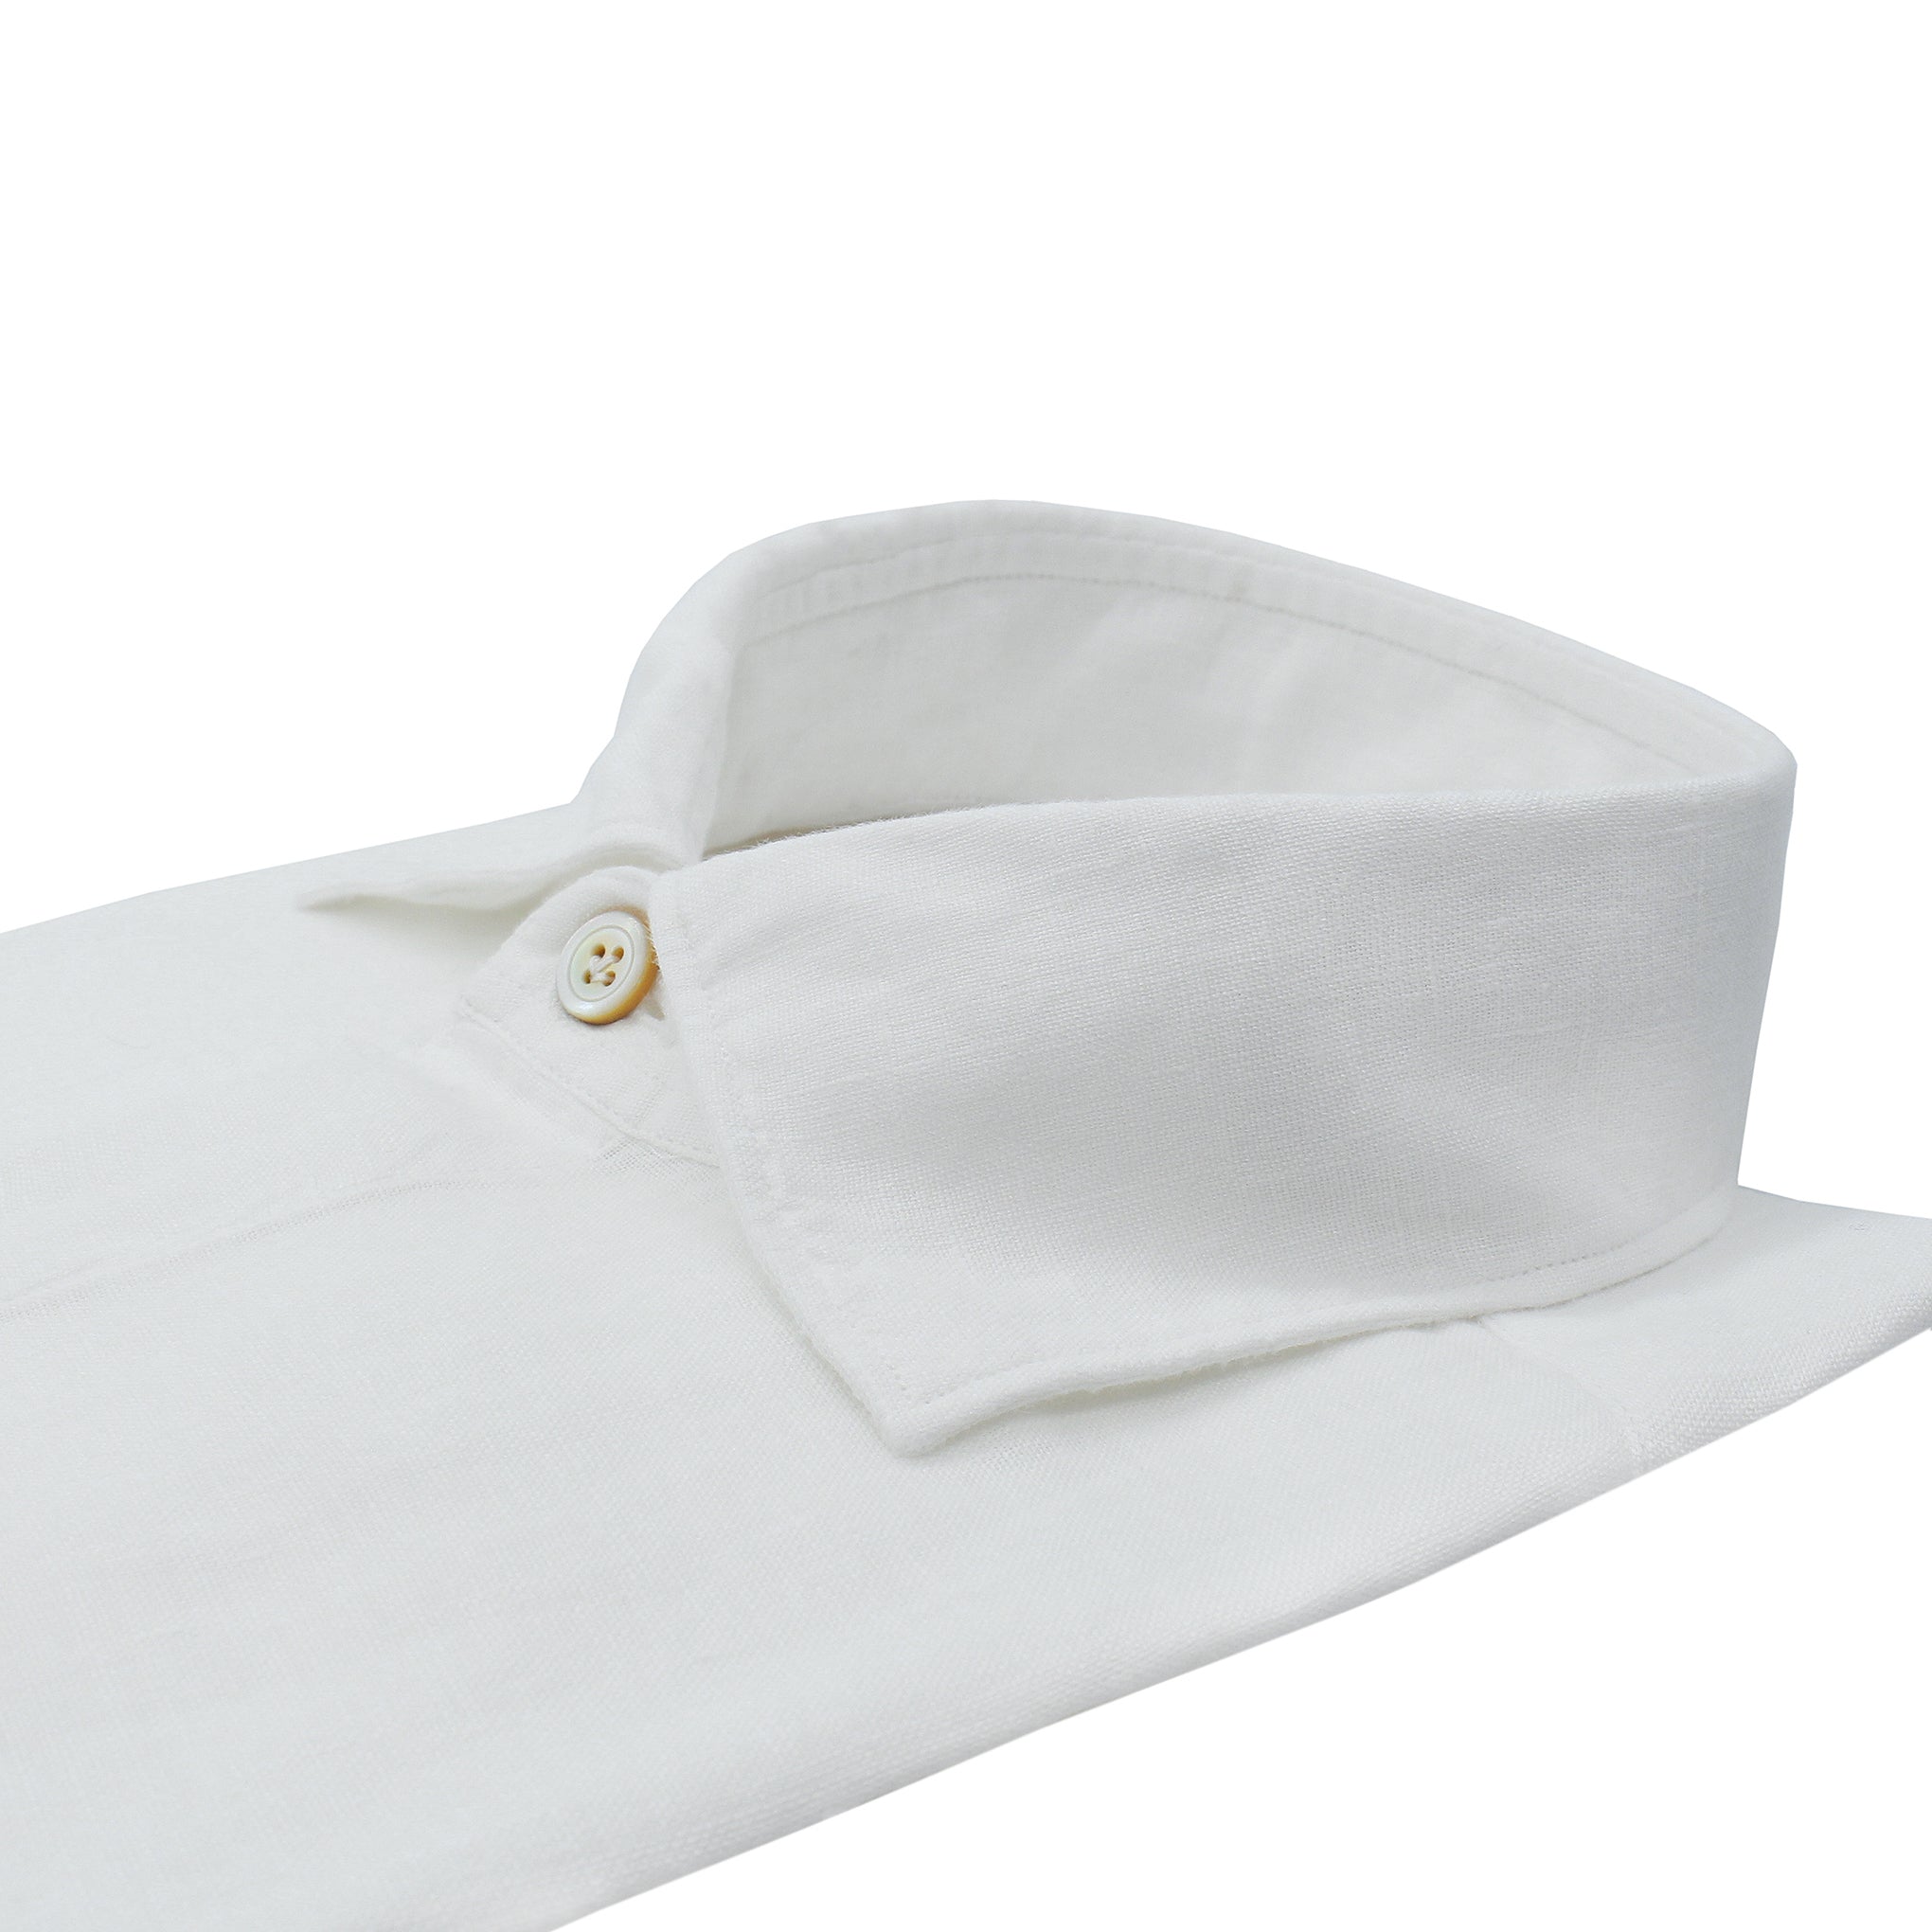 Slim fit linen sports shirt Finamore 1925 white, gray or light blue